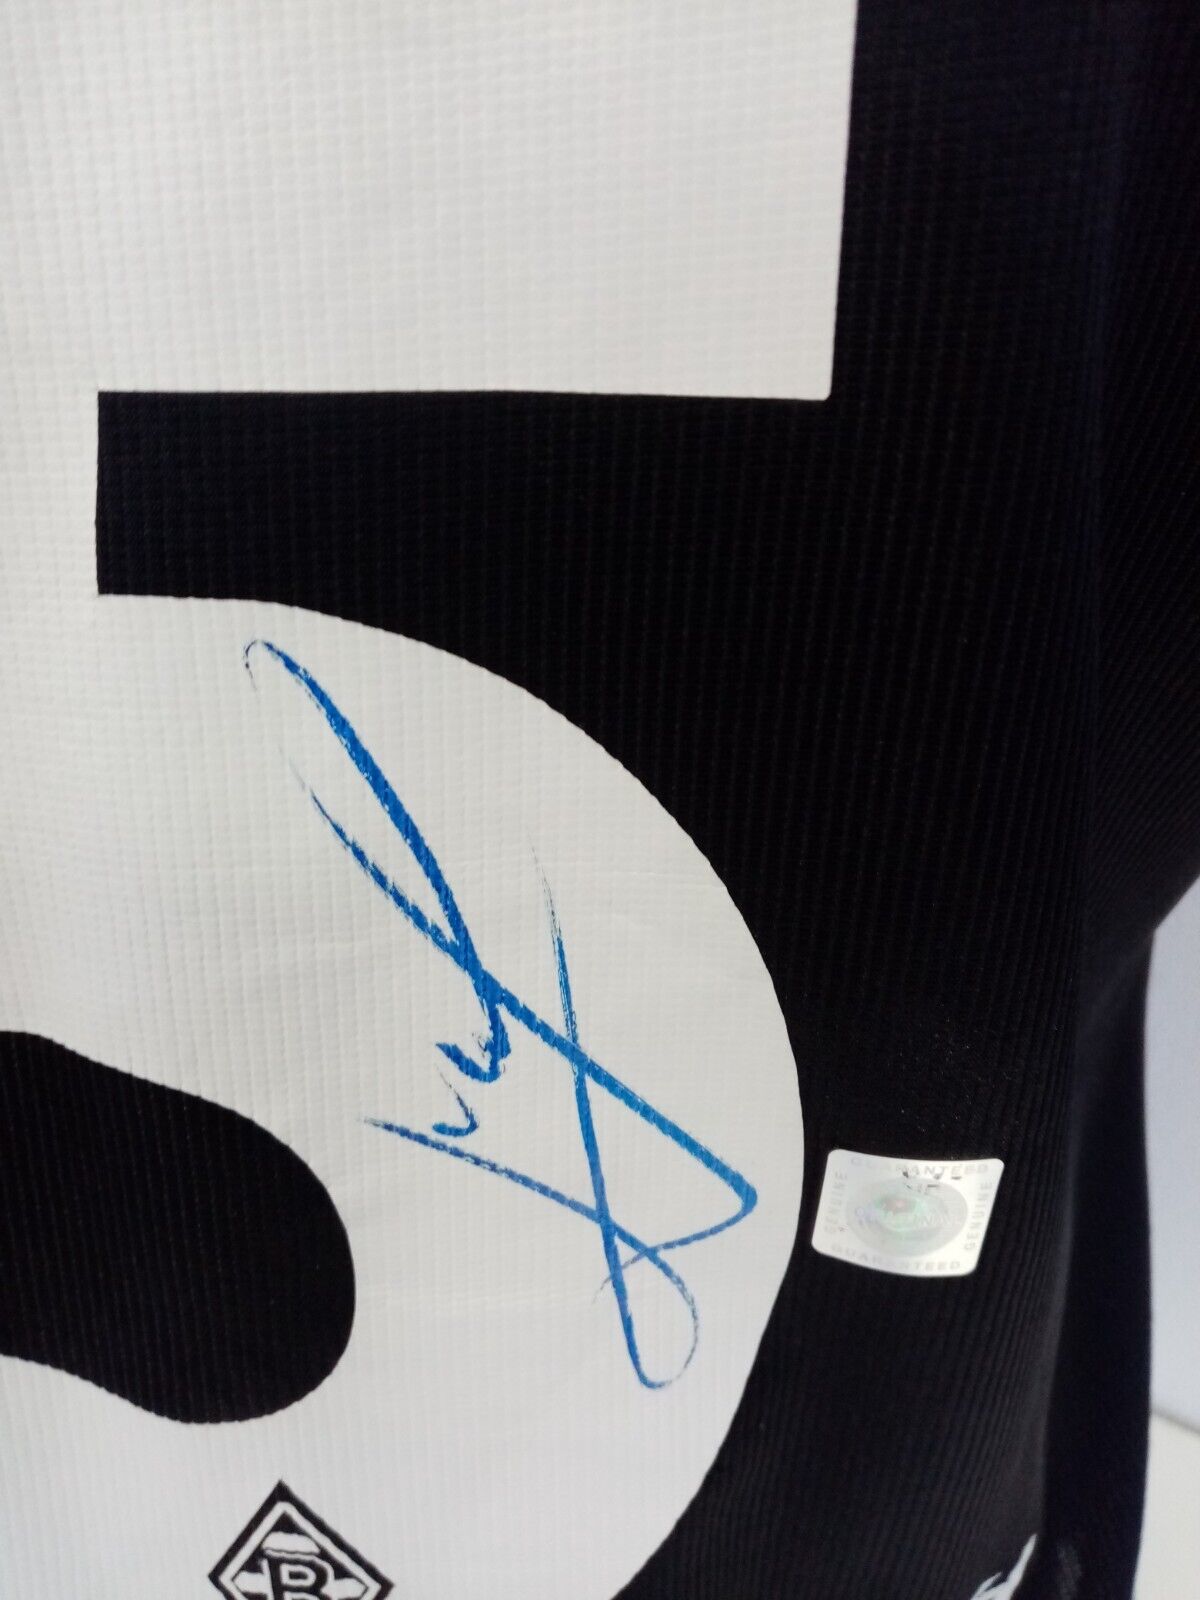 Borussia Mönchengladbach Trikot Marcell Jansen signiert Autogramm Lotto 152-158